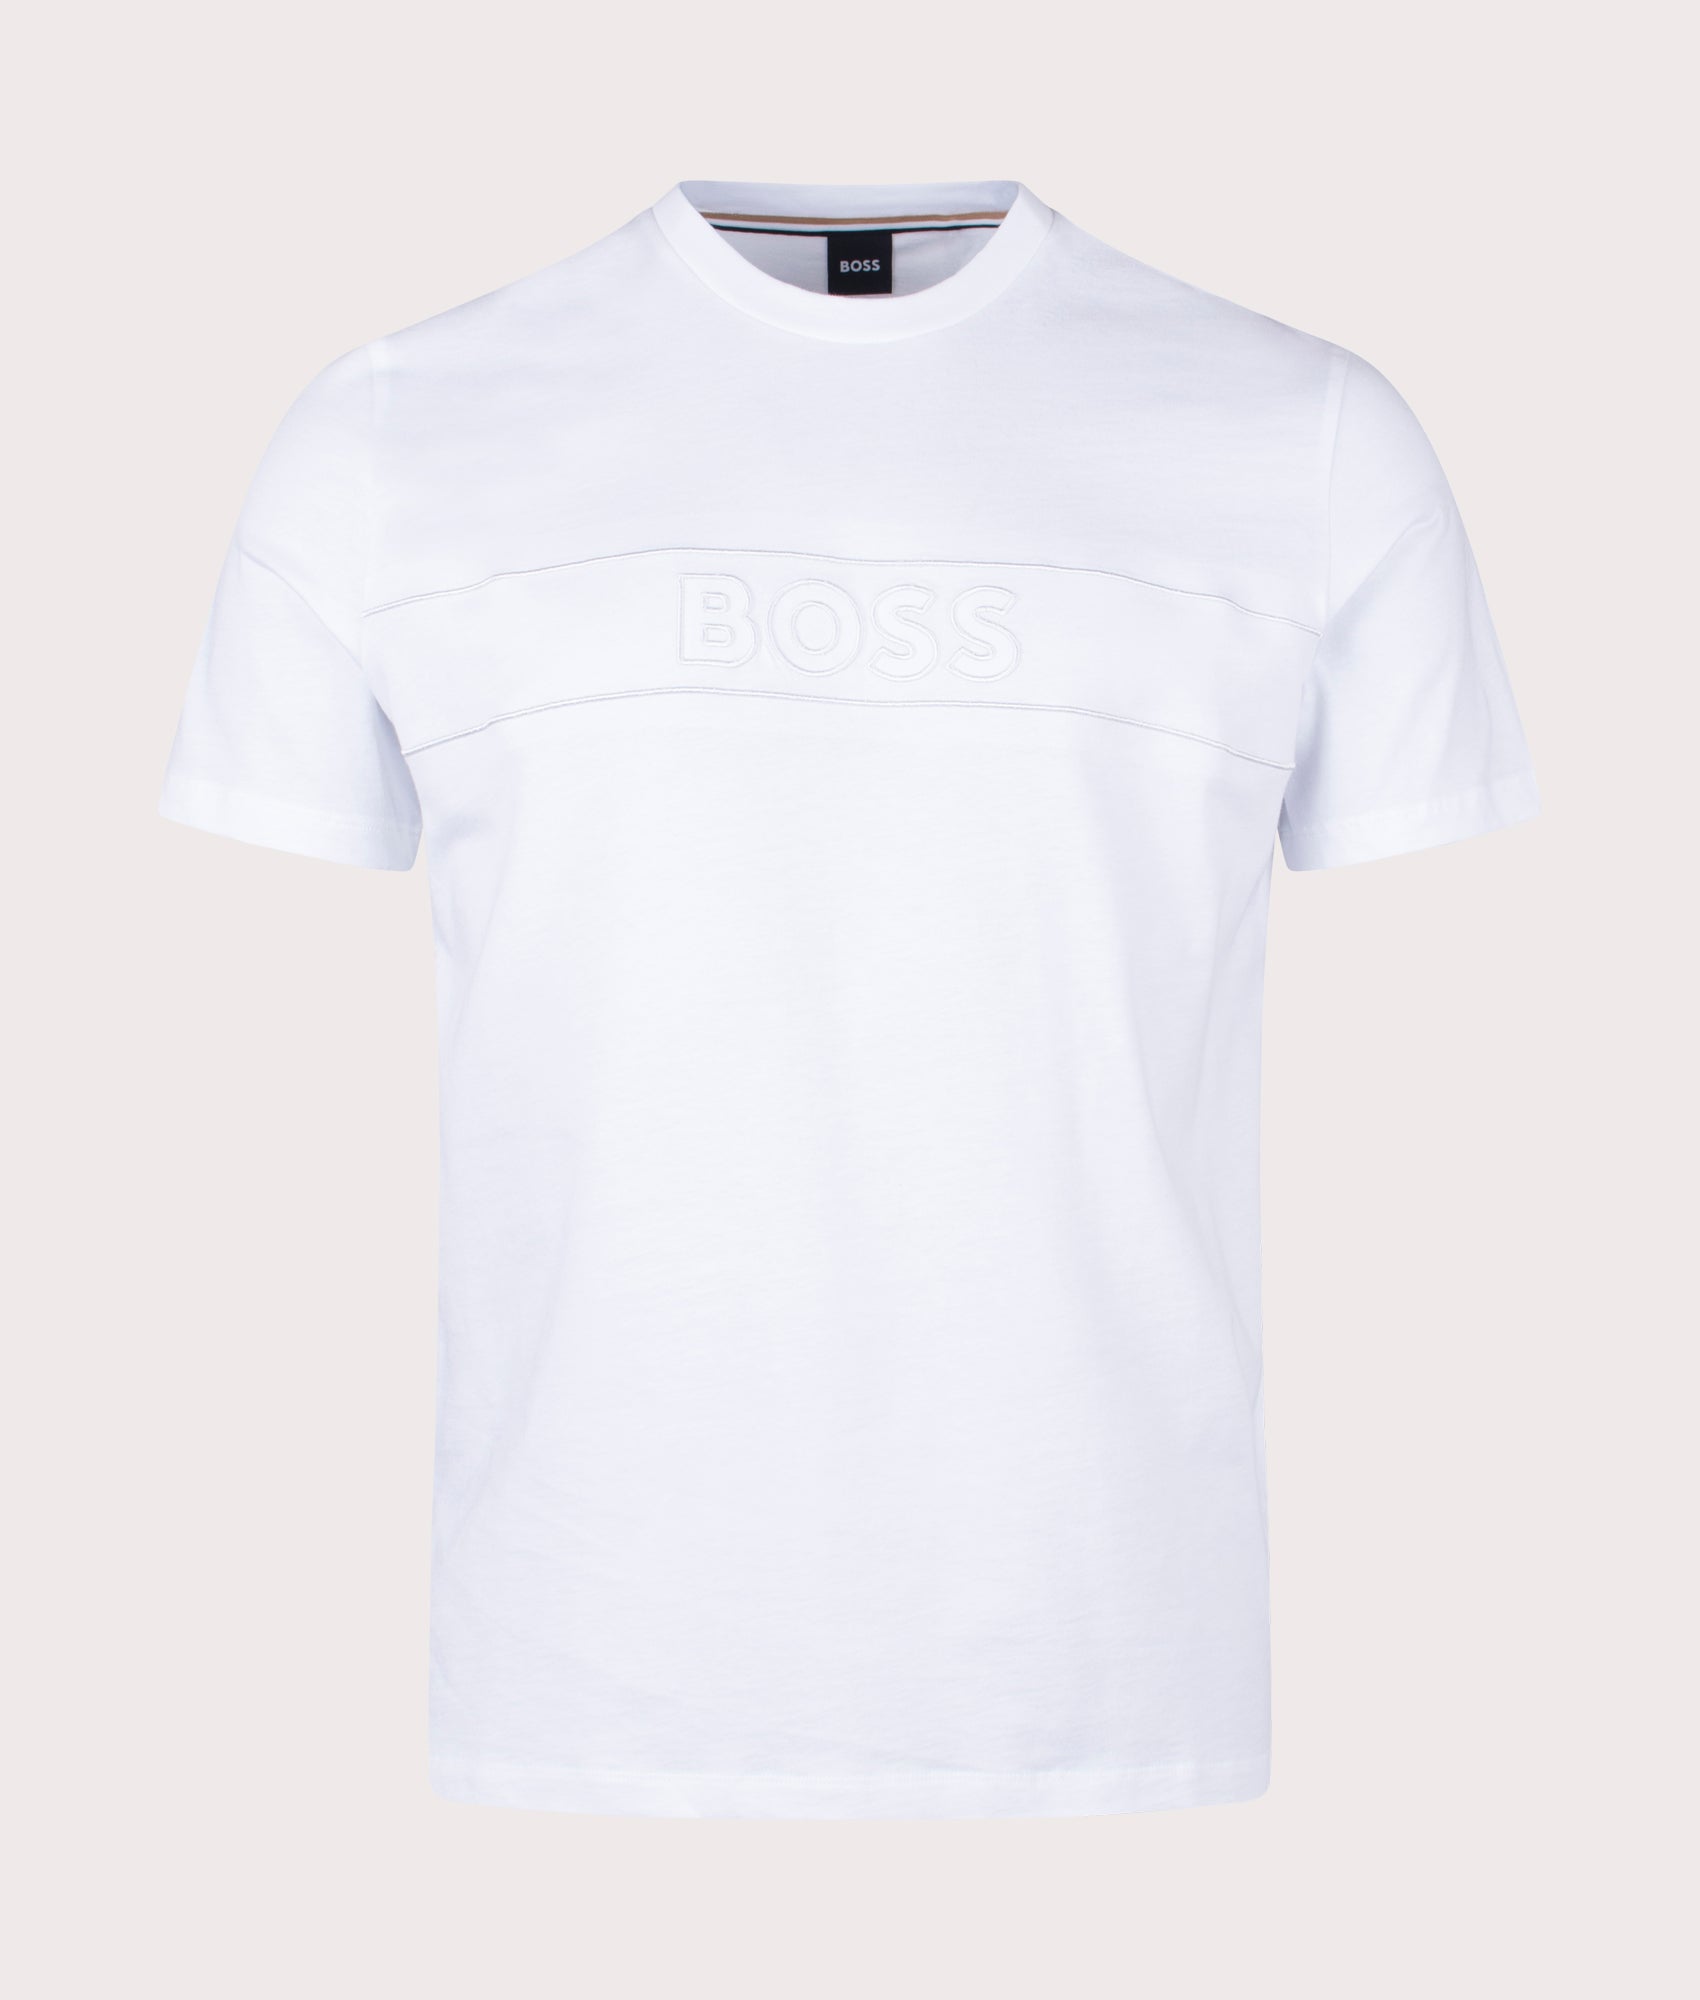 BOSS Mens Fashion T-Shirt - Colour: 100 White - Size: Medium